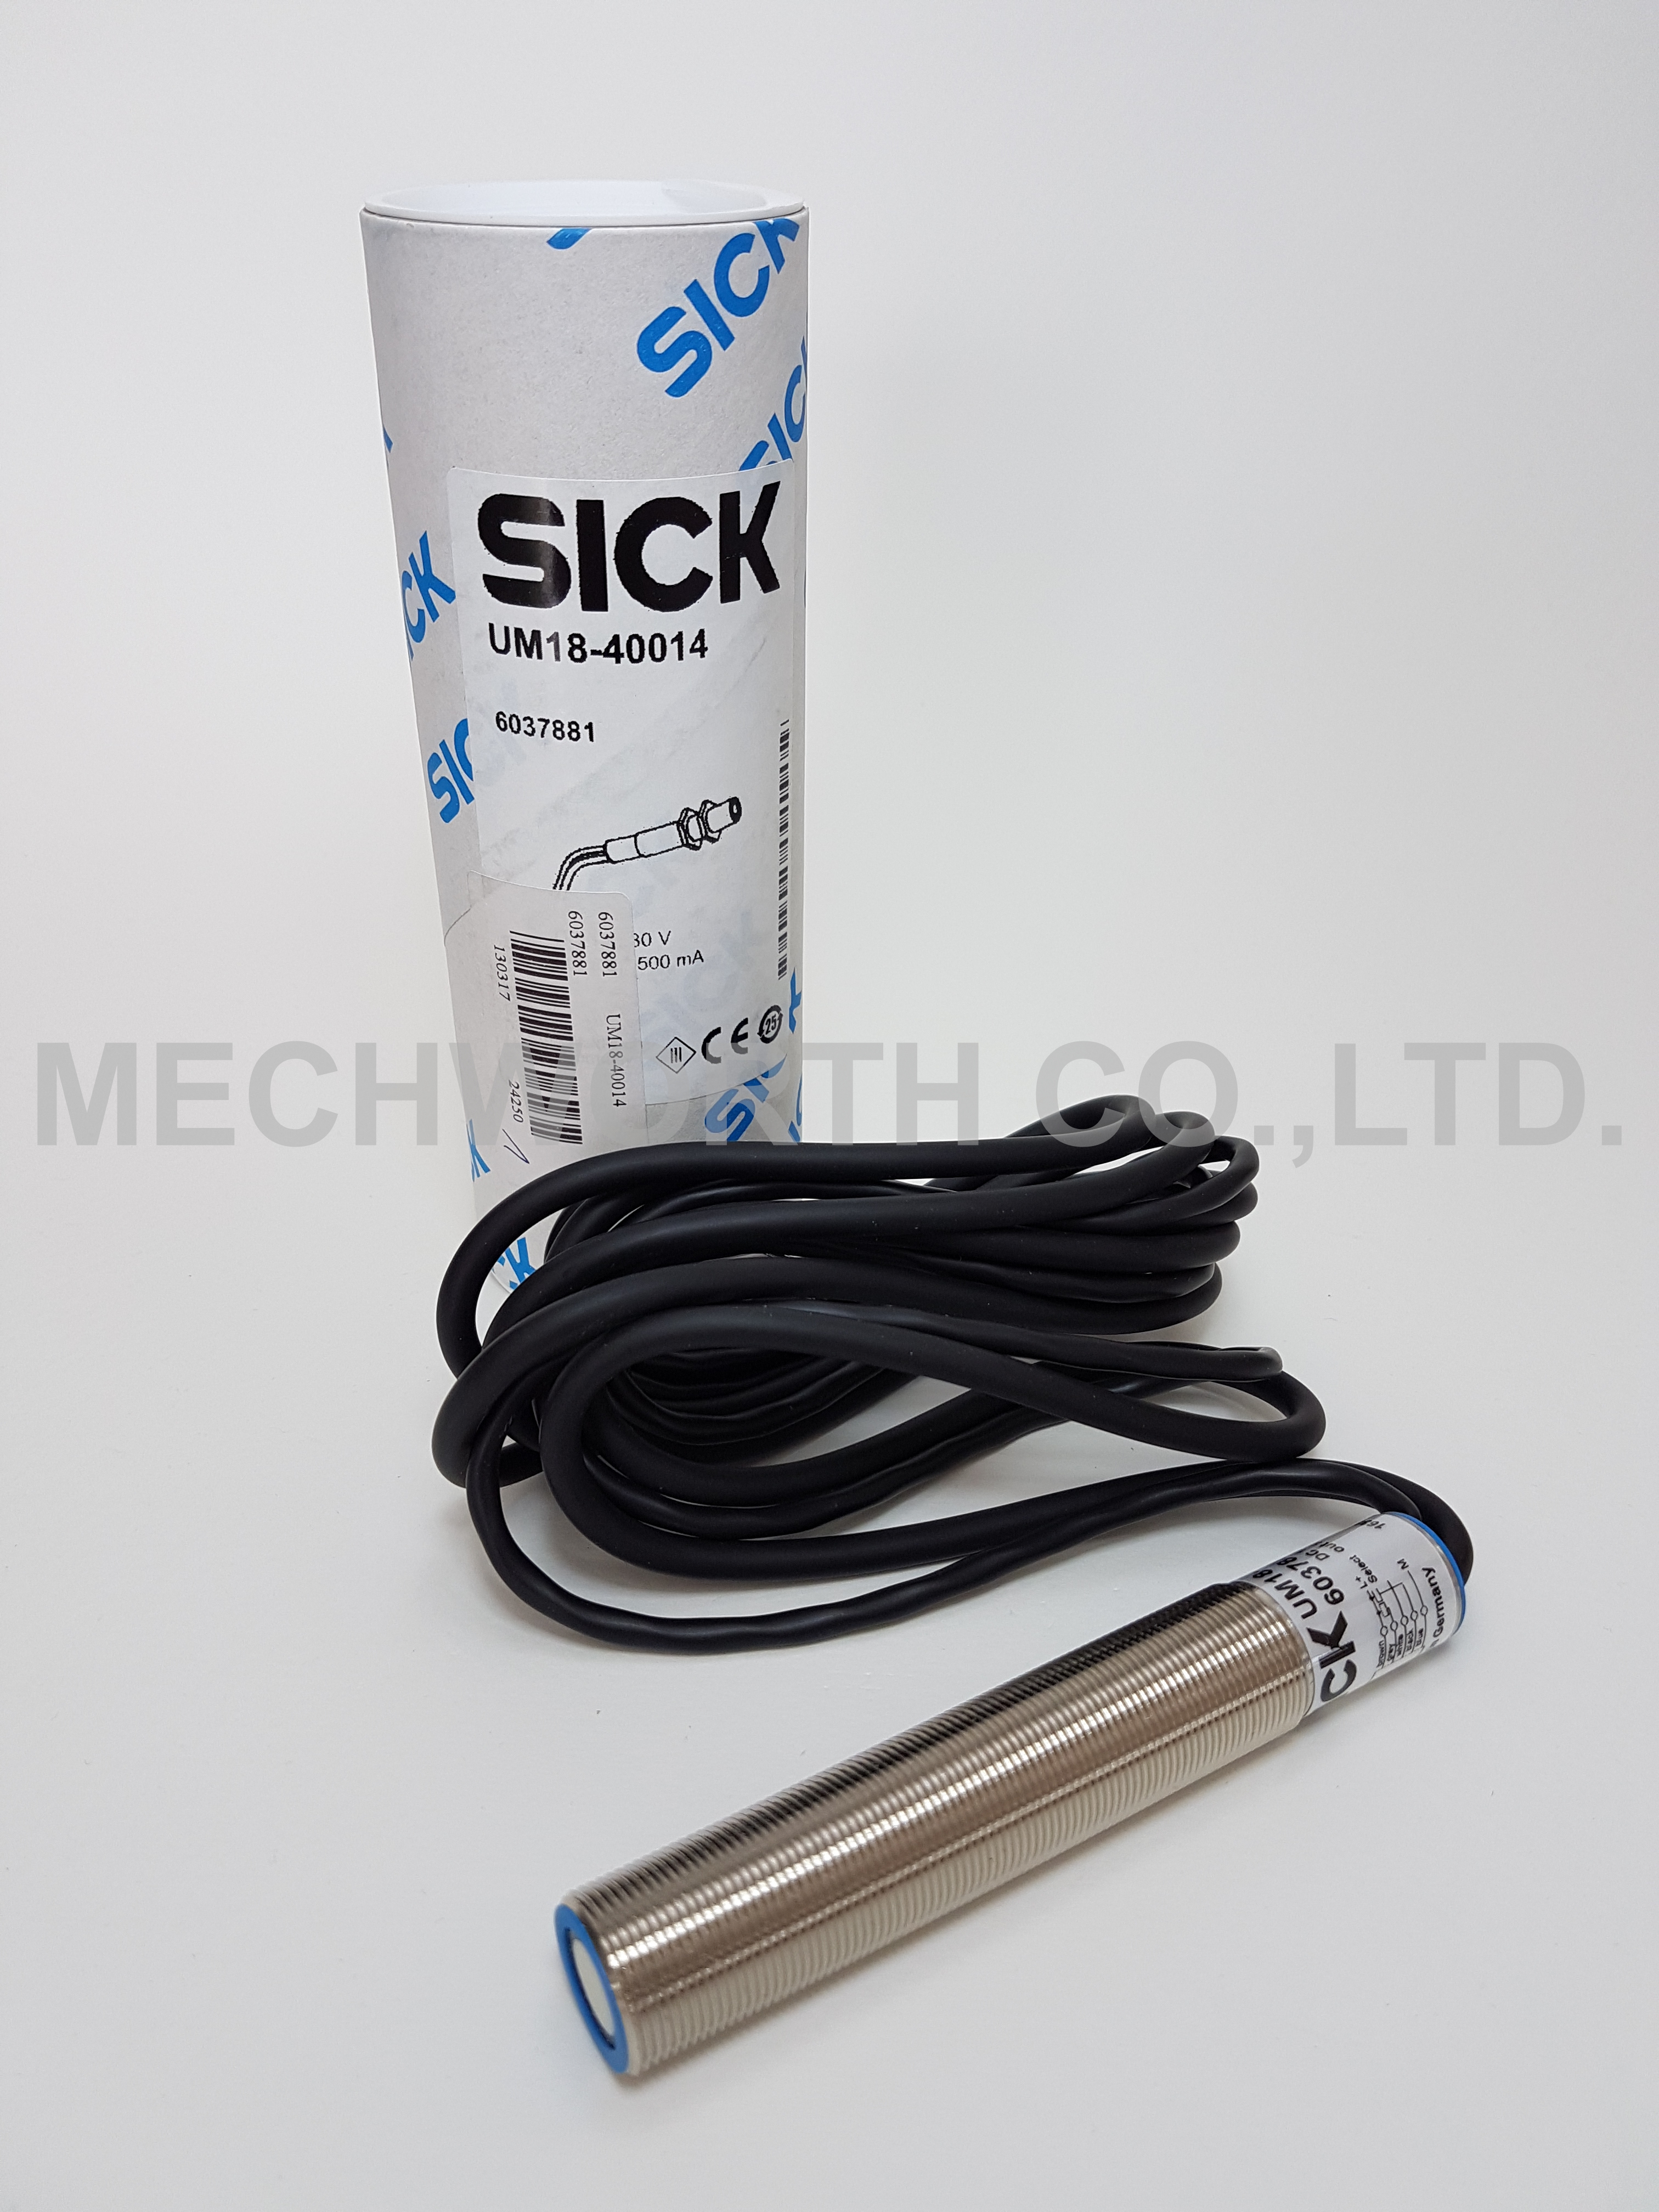 SICK / Ultrasonic sensor / UM18-40014